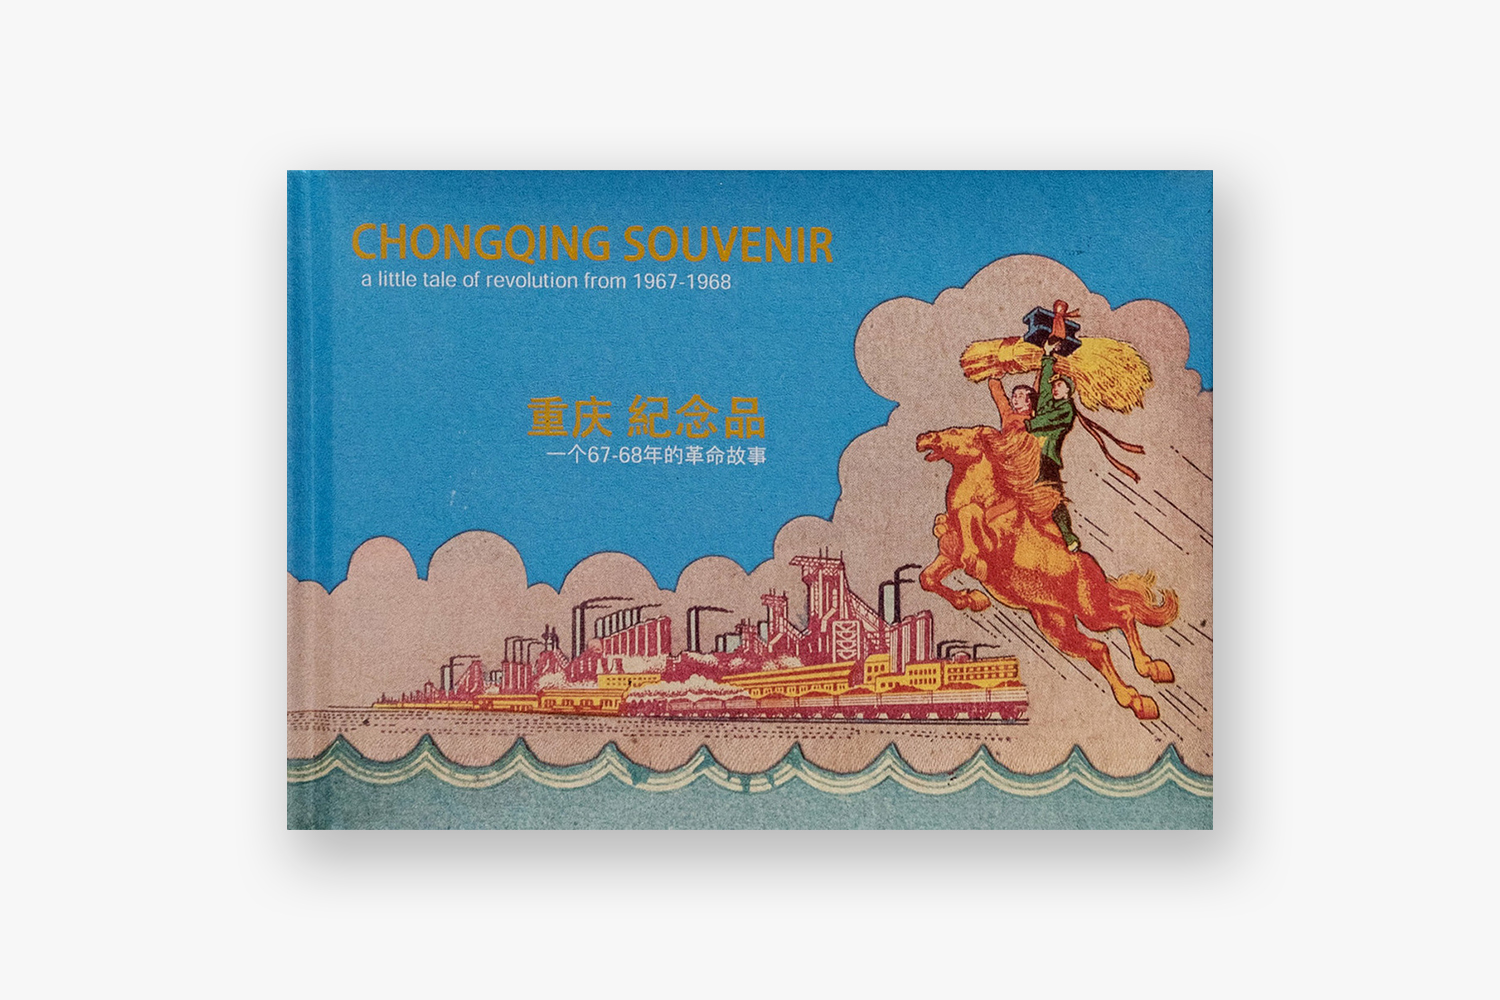 CHONGQING SOUVENIR cover2 - Chongching Souvenir |  - CHONGQING SOUVENIR – a little tale of Revolution 1967-1968